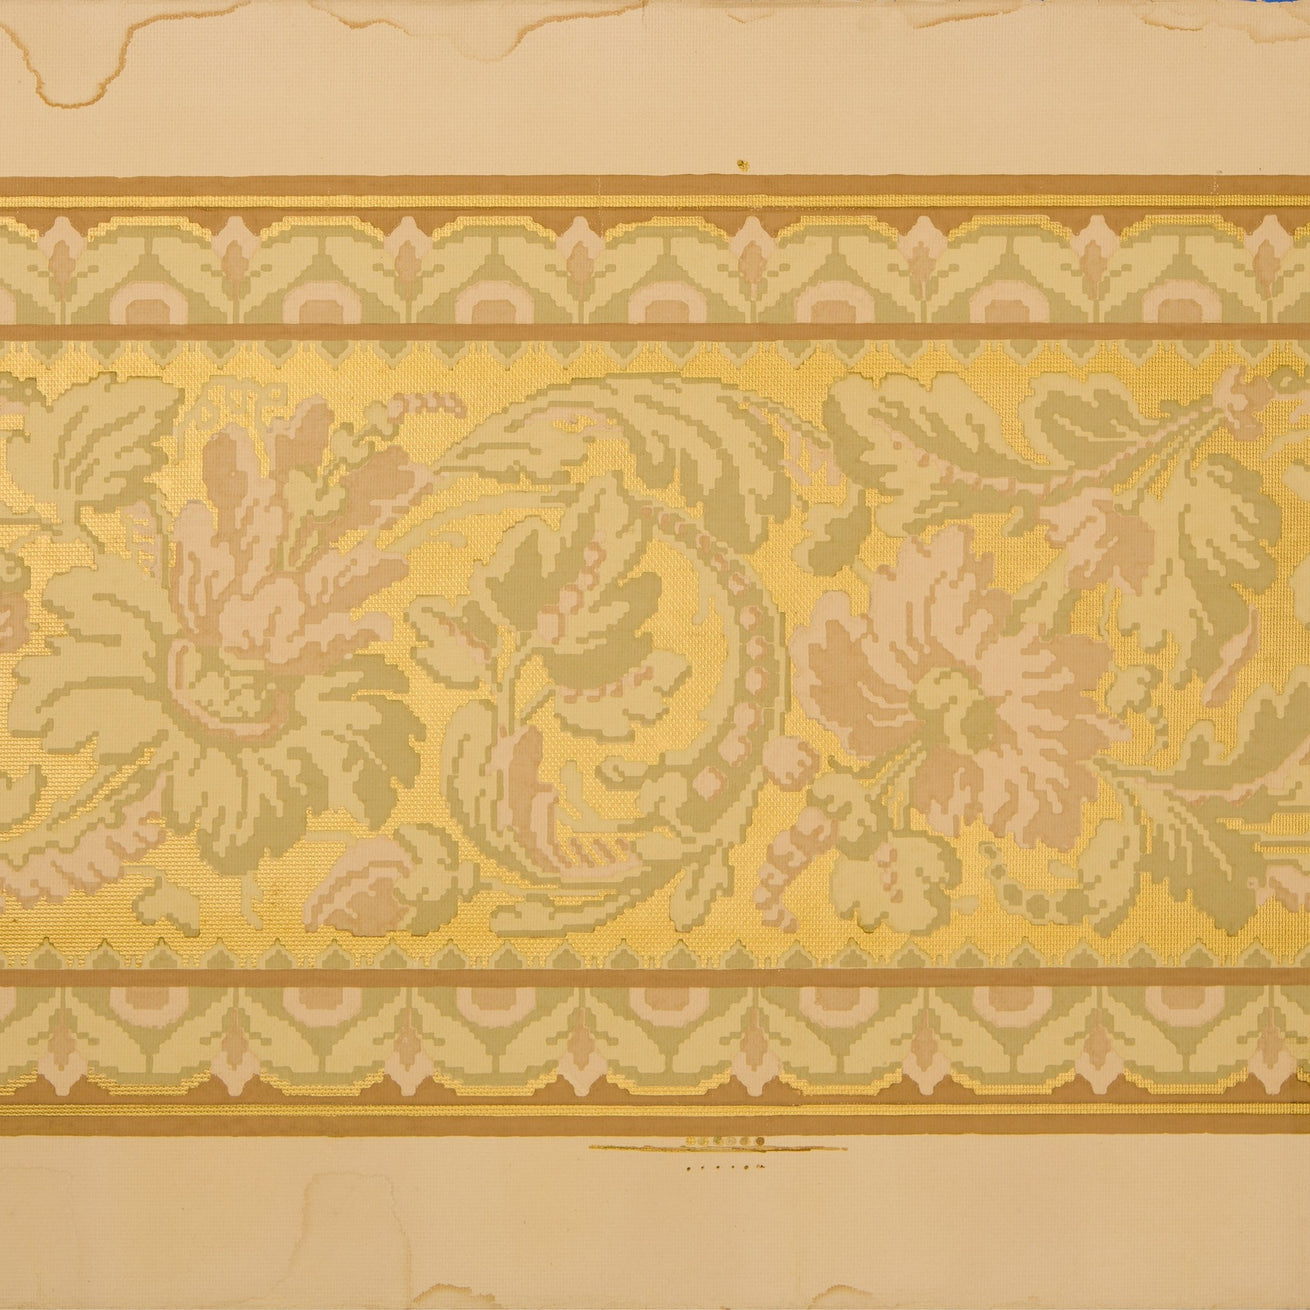 Scrolling Floral Foliate Tapestry Border - Antique Wallpaper Remnant